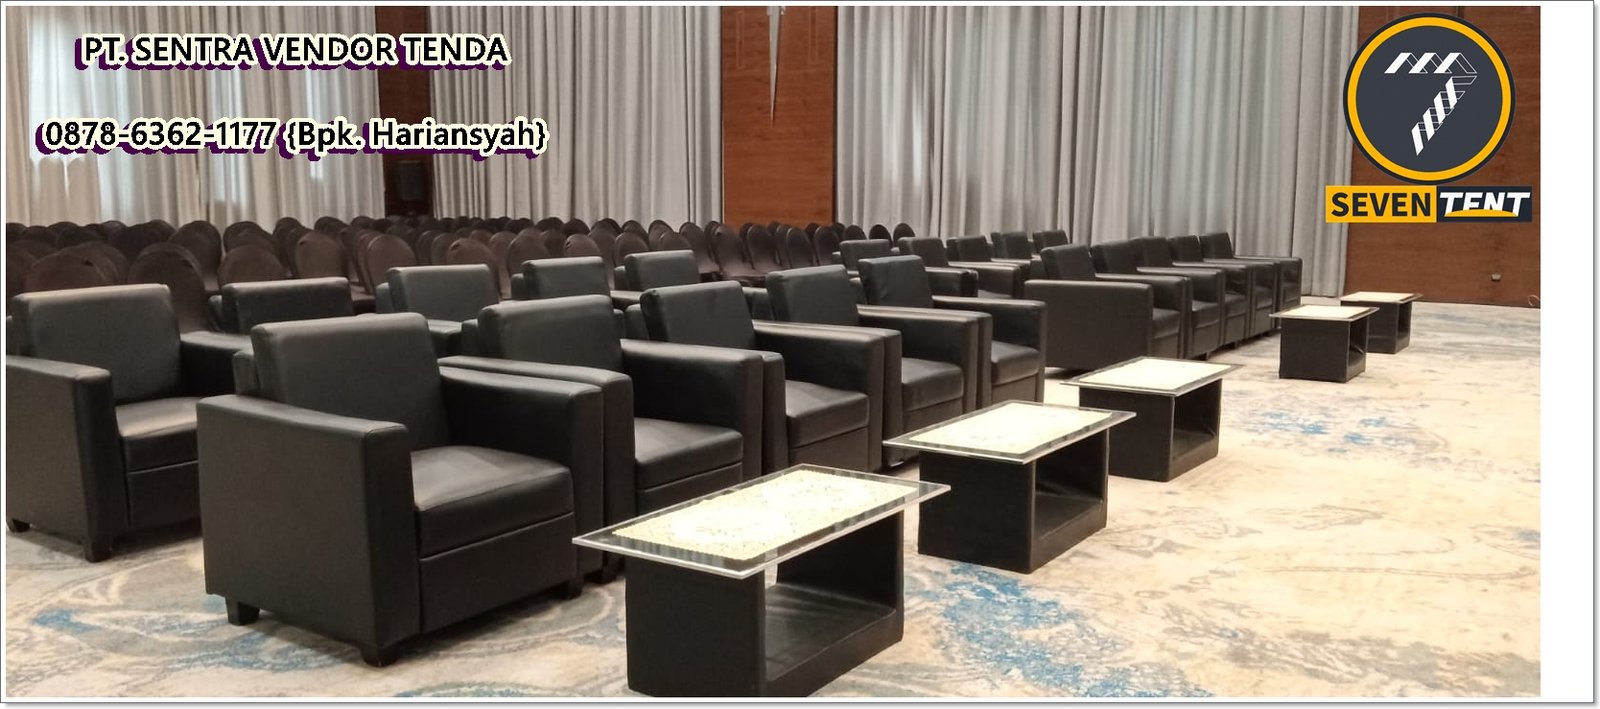 Layanan Sewa Kursi Sofa Berkualitas Stok Melimpah Jakarta Pusat